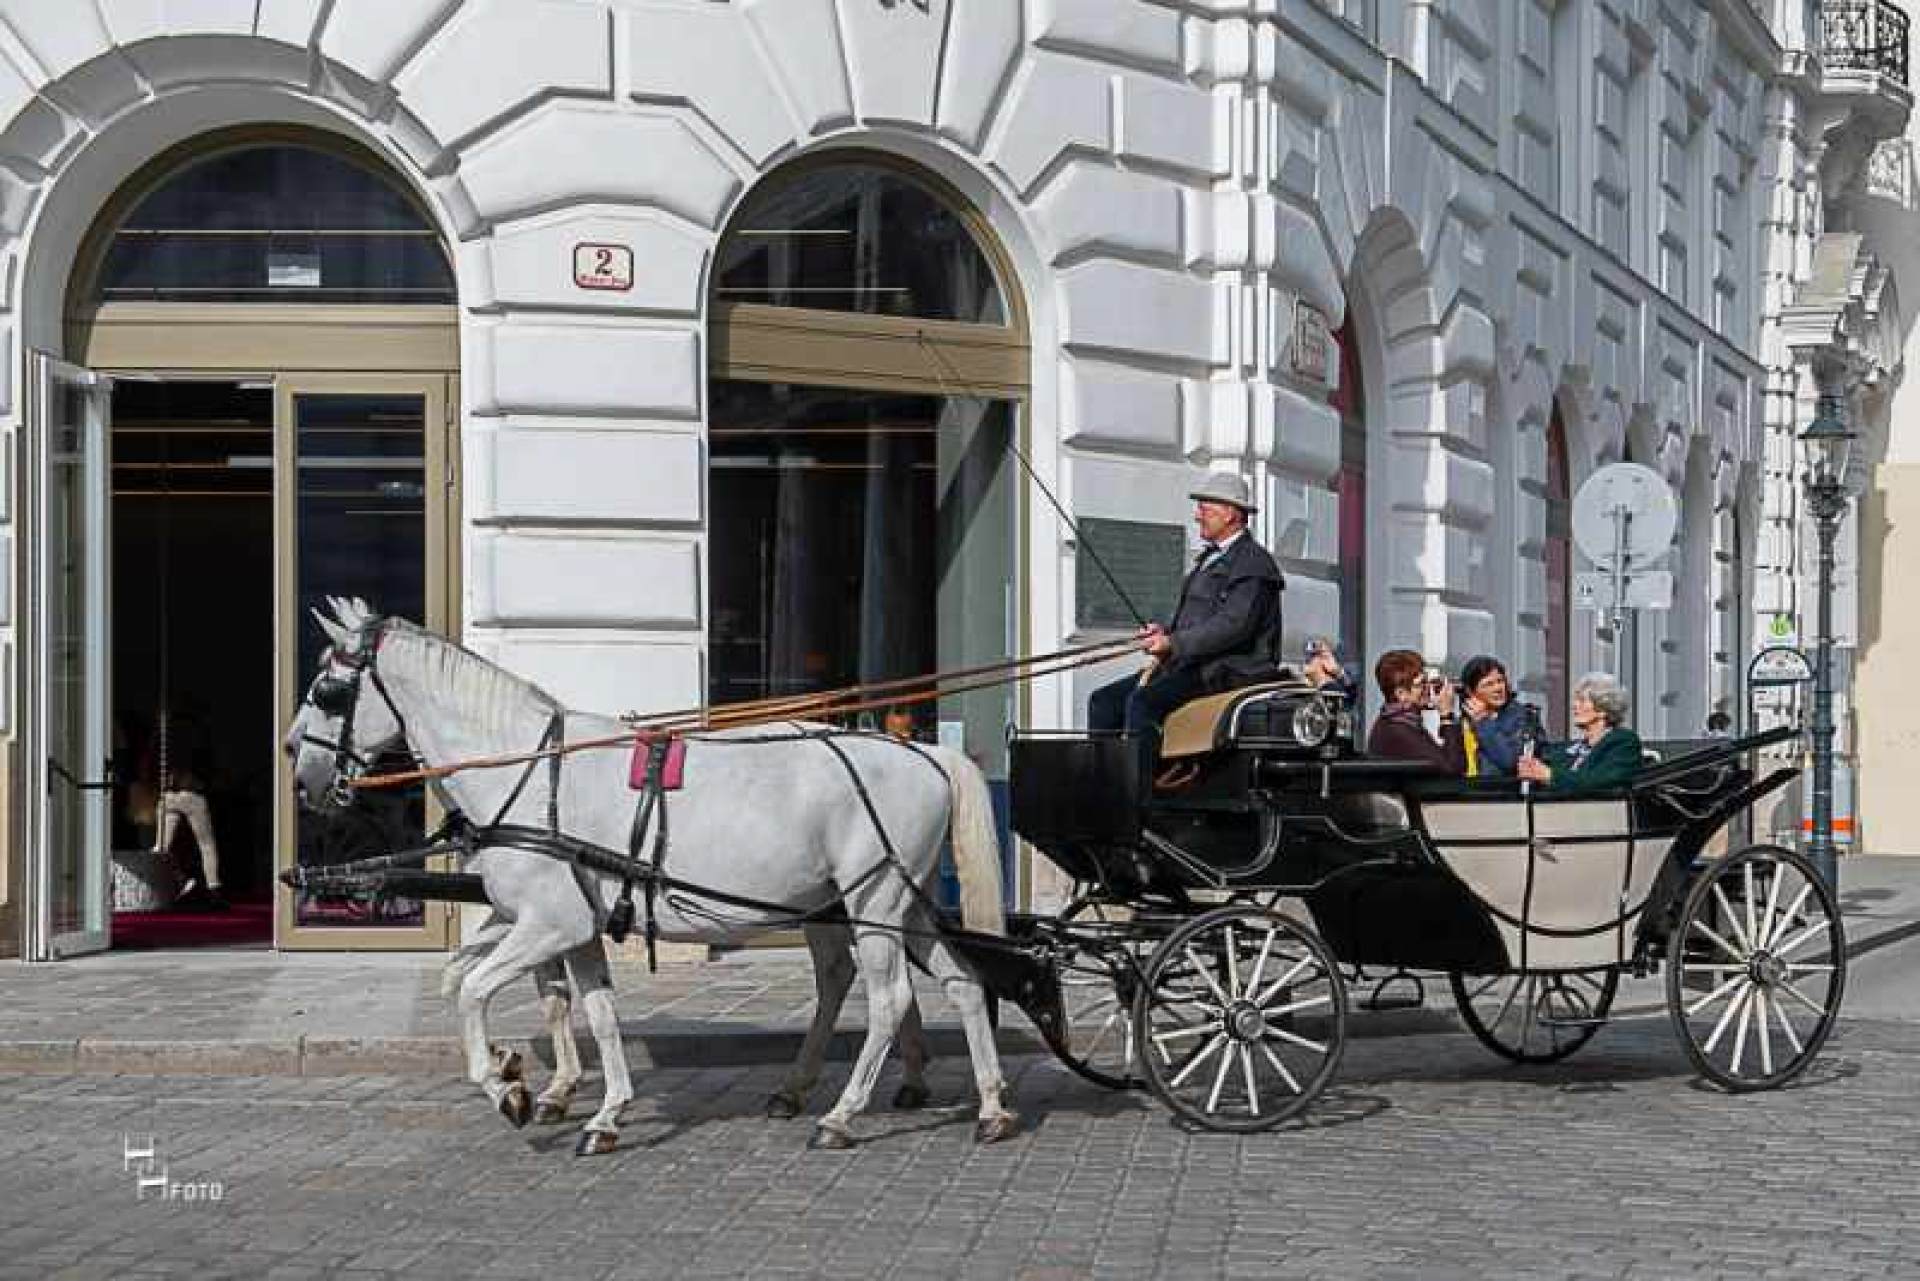 Giro in carrozza trainata da cavalli a Vienna